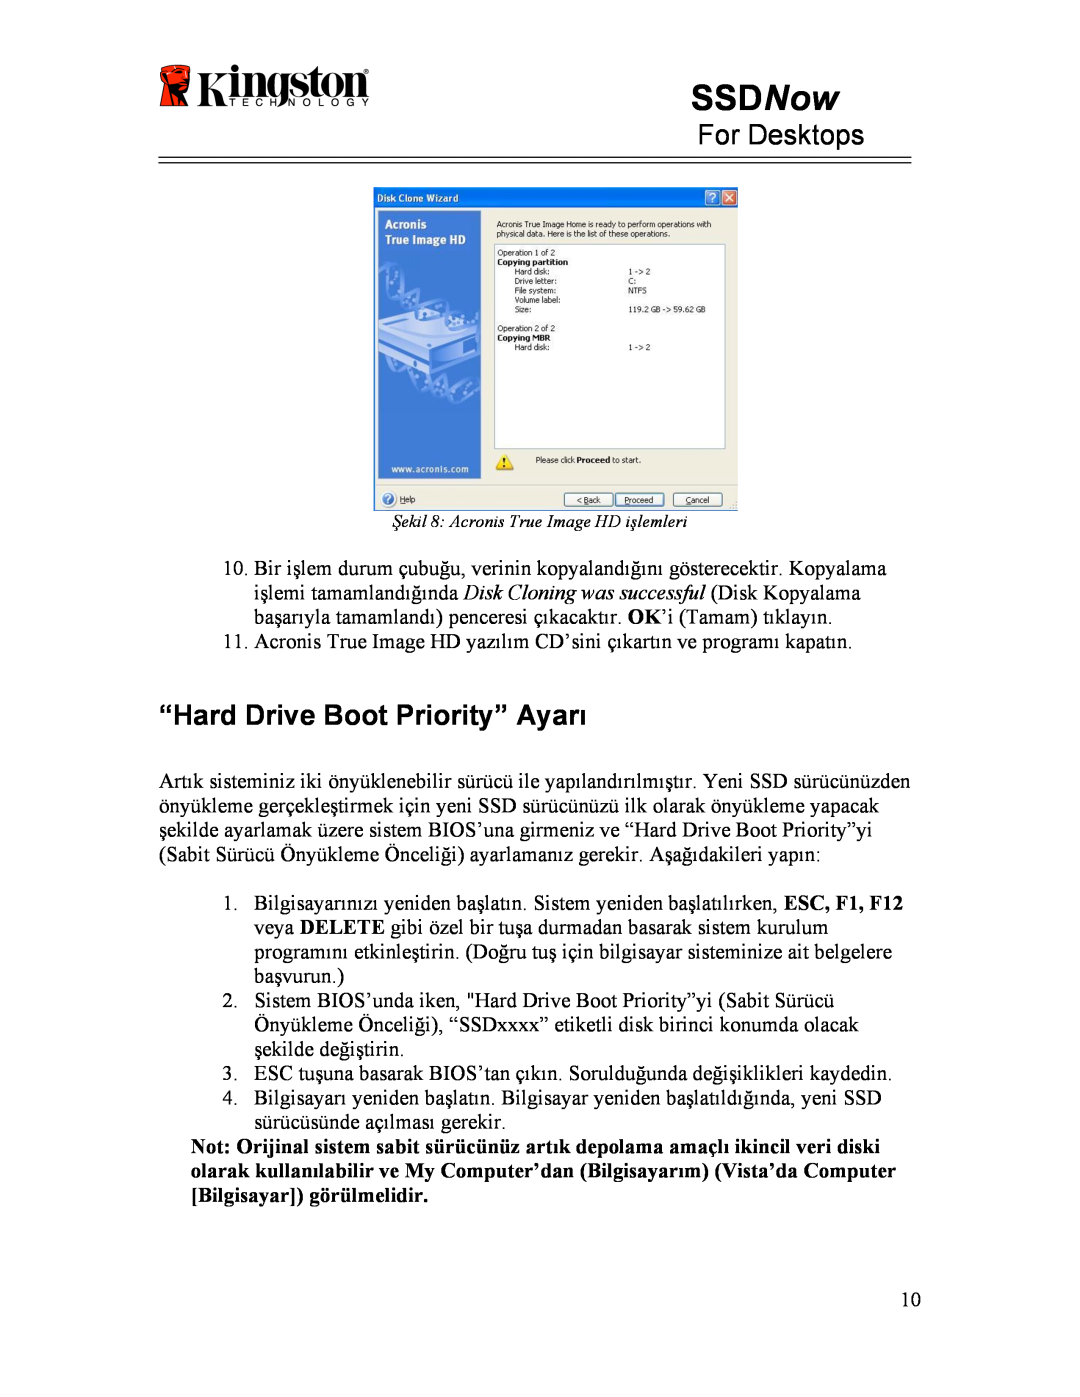 Kingston Technology 07-16-2009 manual “Hard Drive Boot Priority” Ayarı, SSDNow, For Desktops 